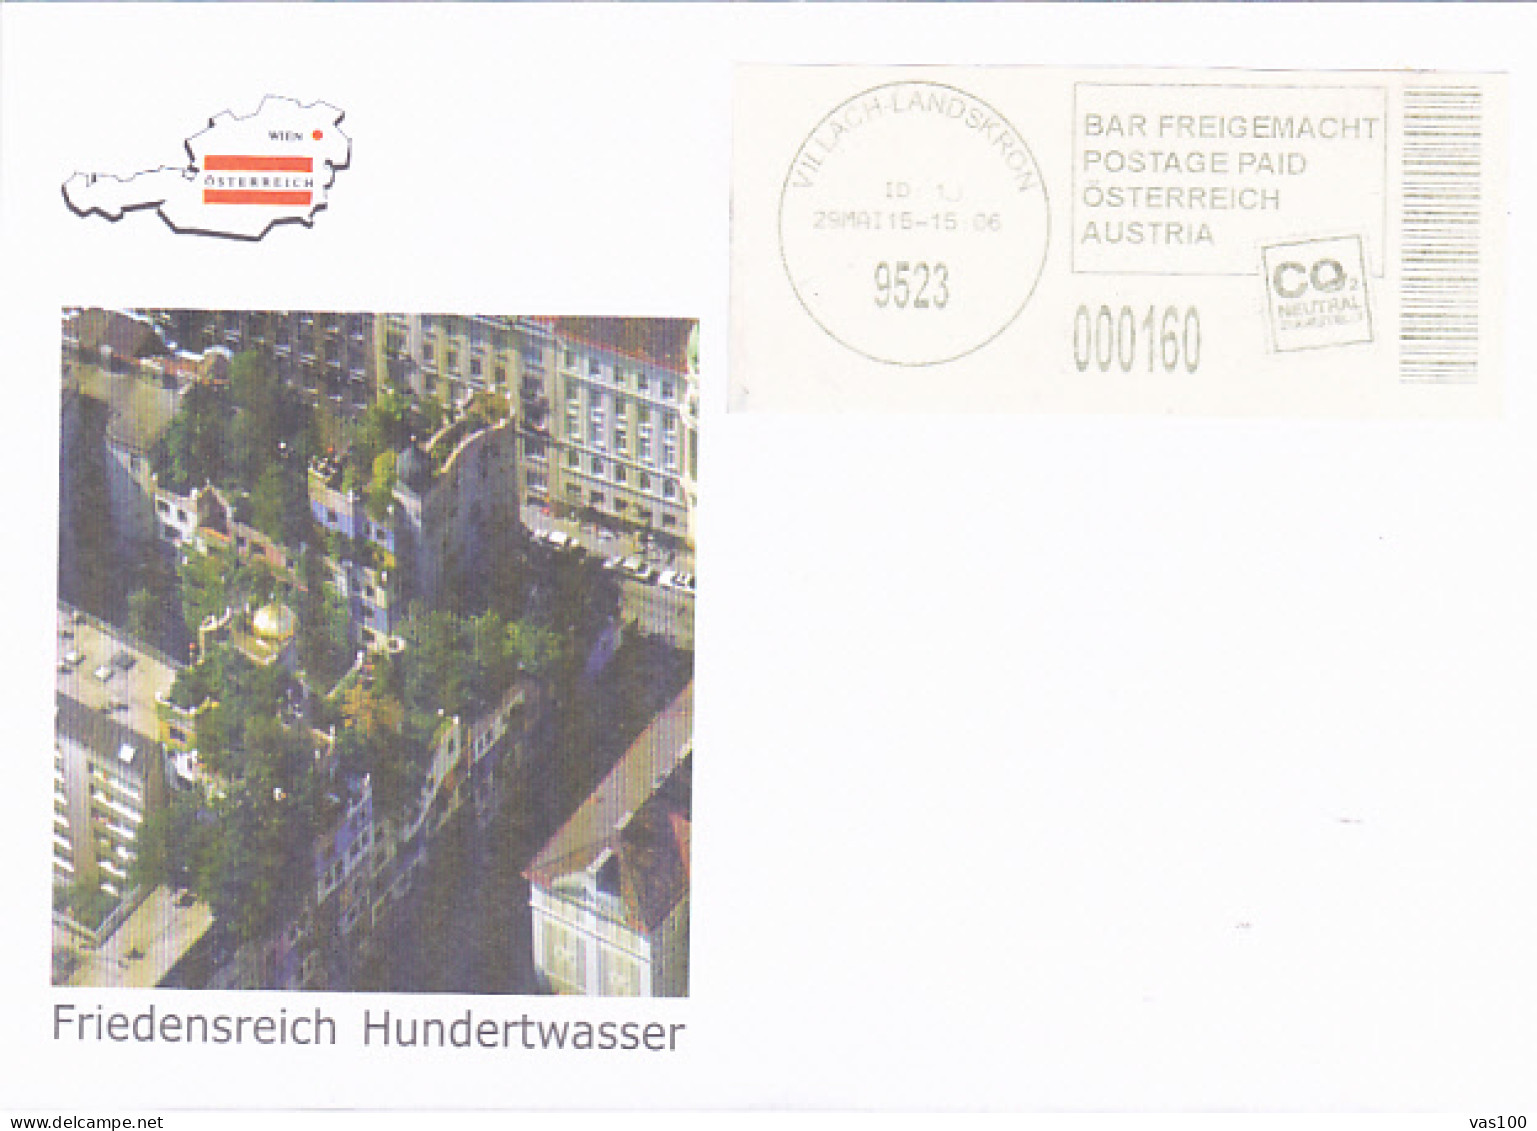 FRIEDENSREICH HUNDERTWASSER, ARCHITECT, POSTAGE PAID SPECIAL COVER, 2015, AUSTRIA - Briefe U. Dokumente